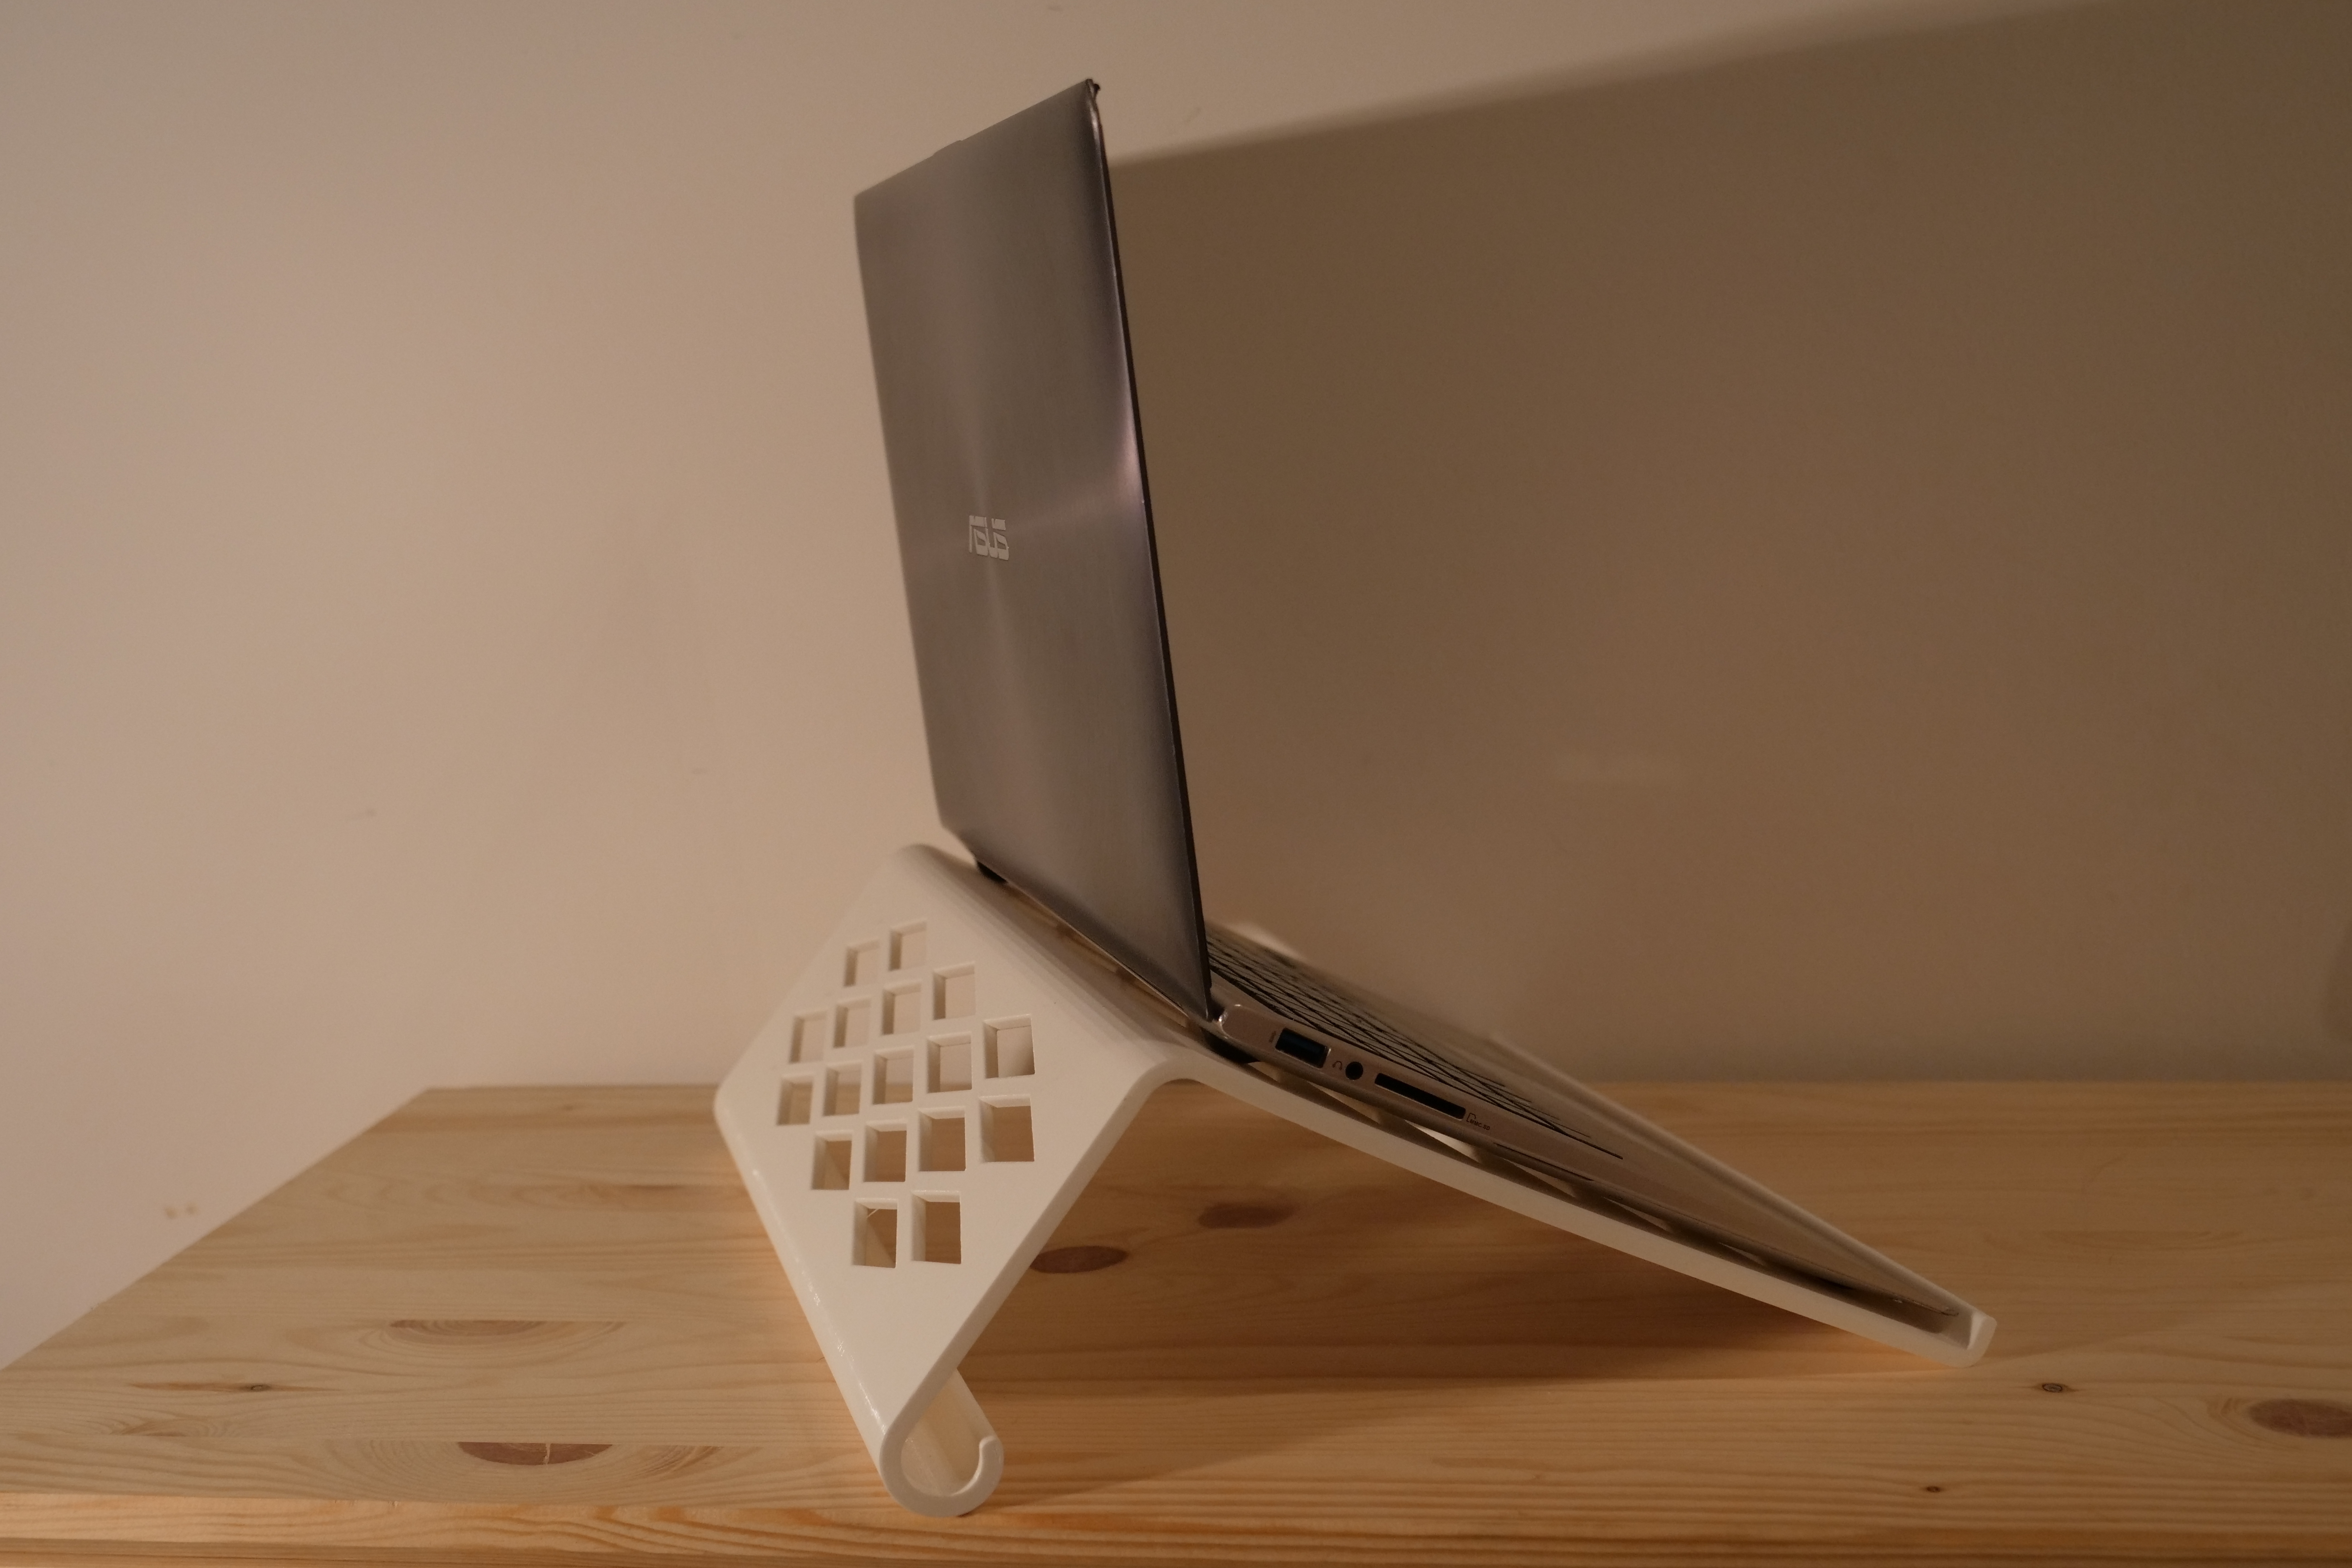 3D Printed Comfortable Netflix" laptop by Károly Ludvigh | Pinshape